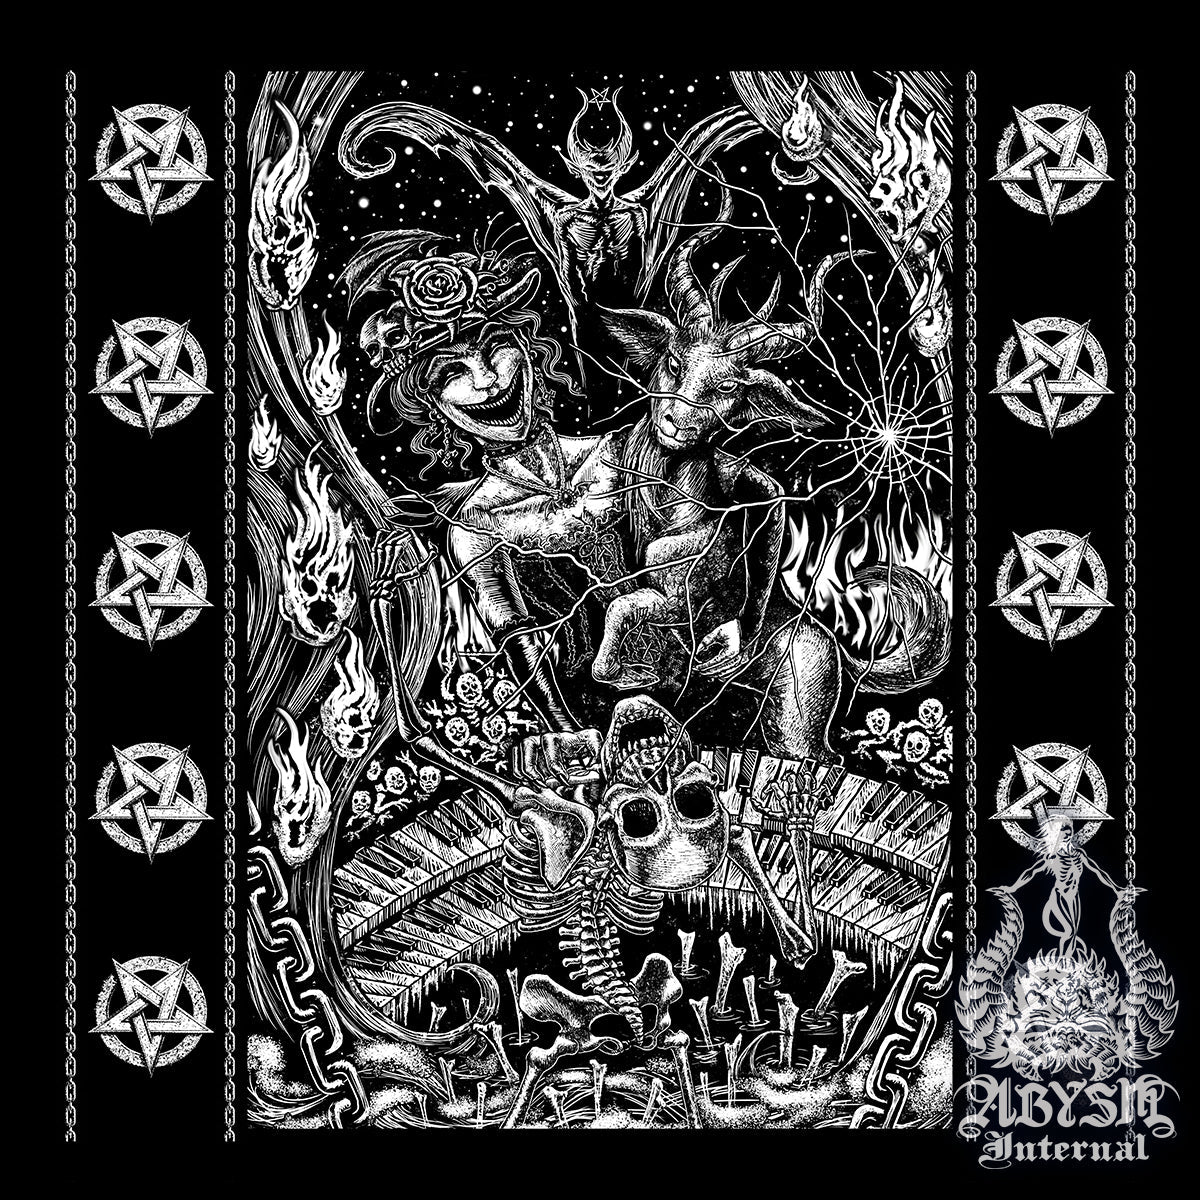 Gothic Hell Series - Abysm Internal